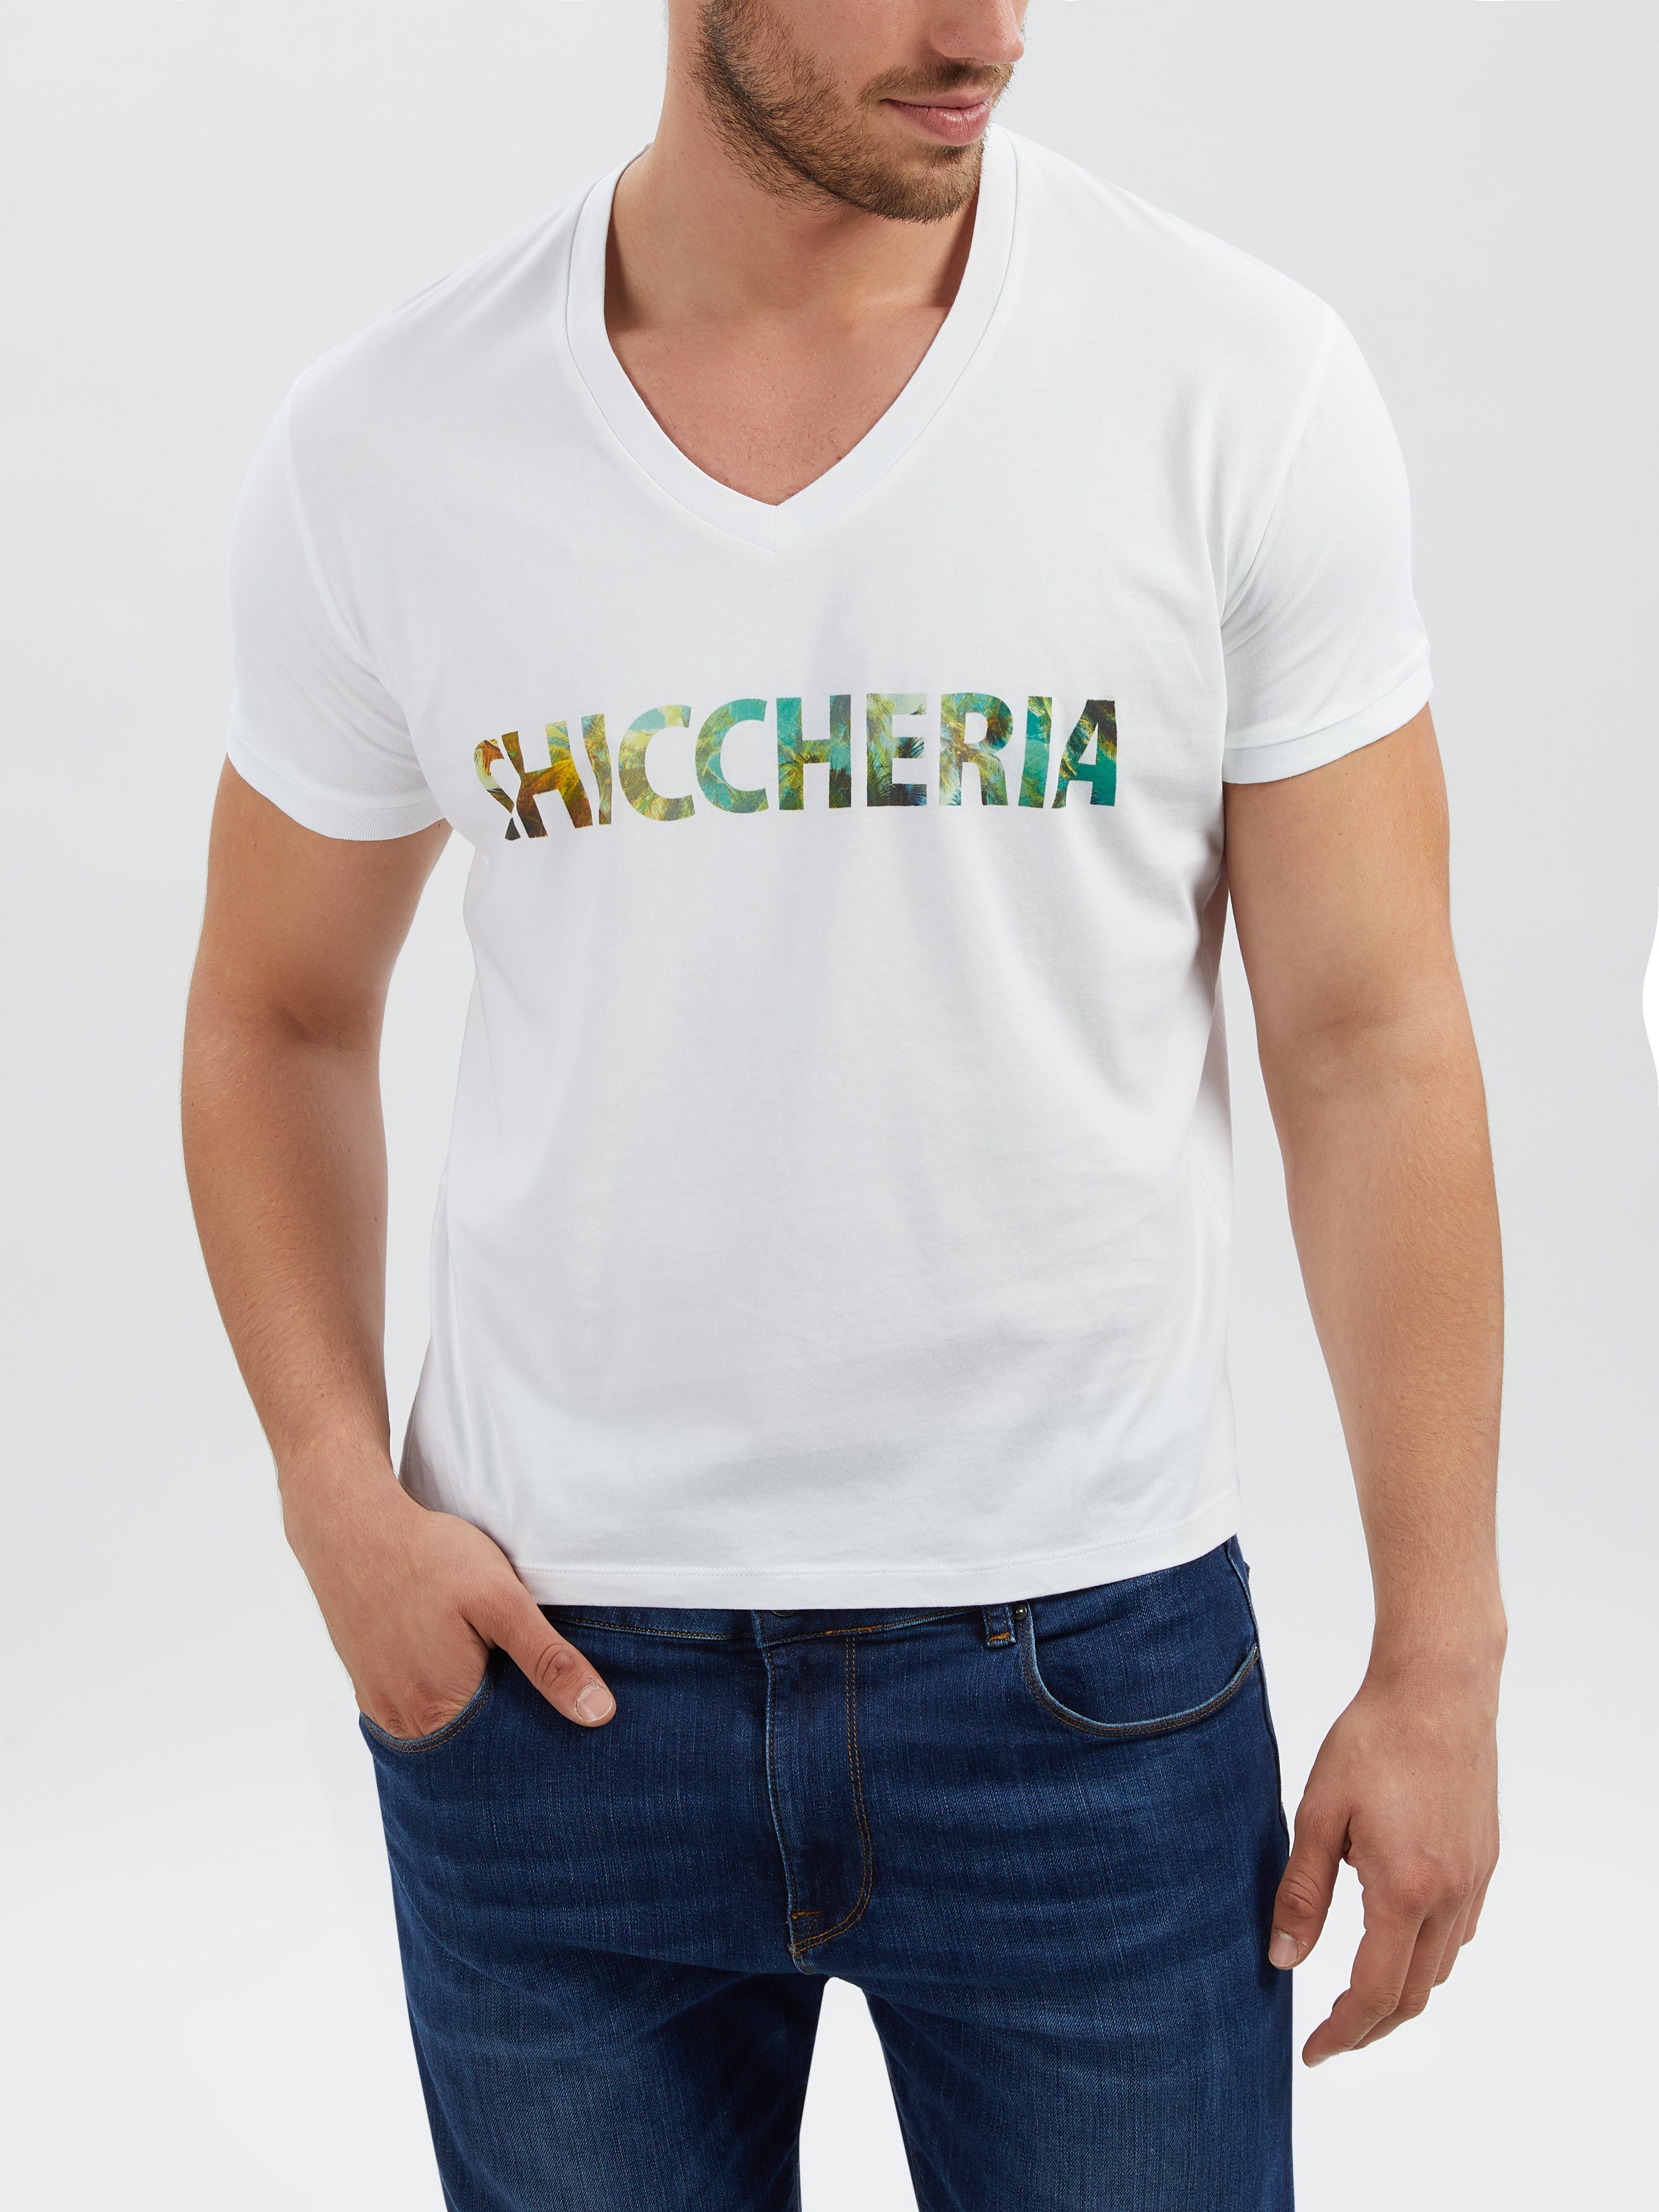 Palm-Logo T-Shirt Designed Los Chiccheria in Weiß Brand Angeles,